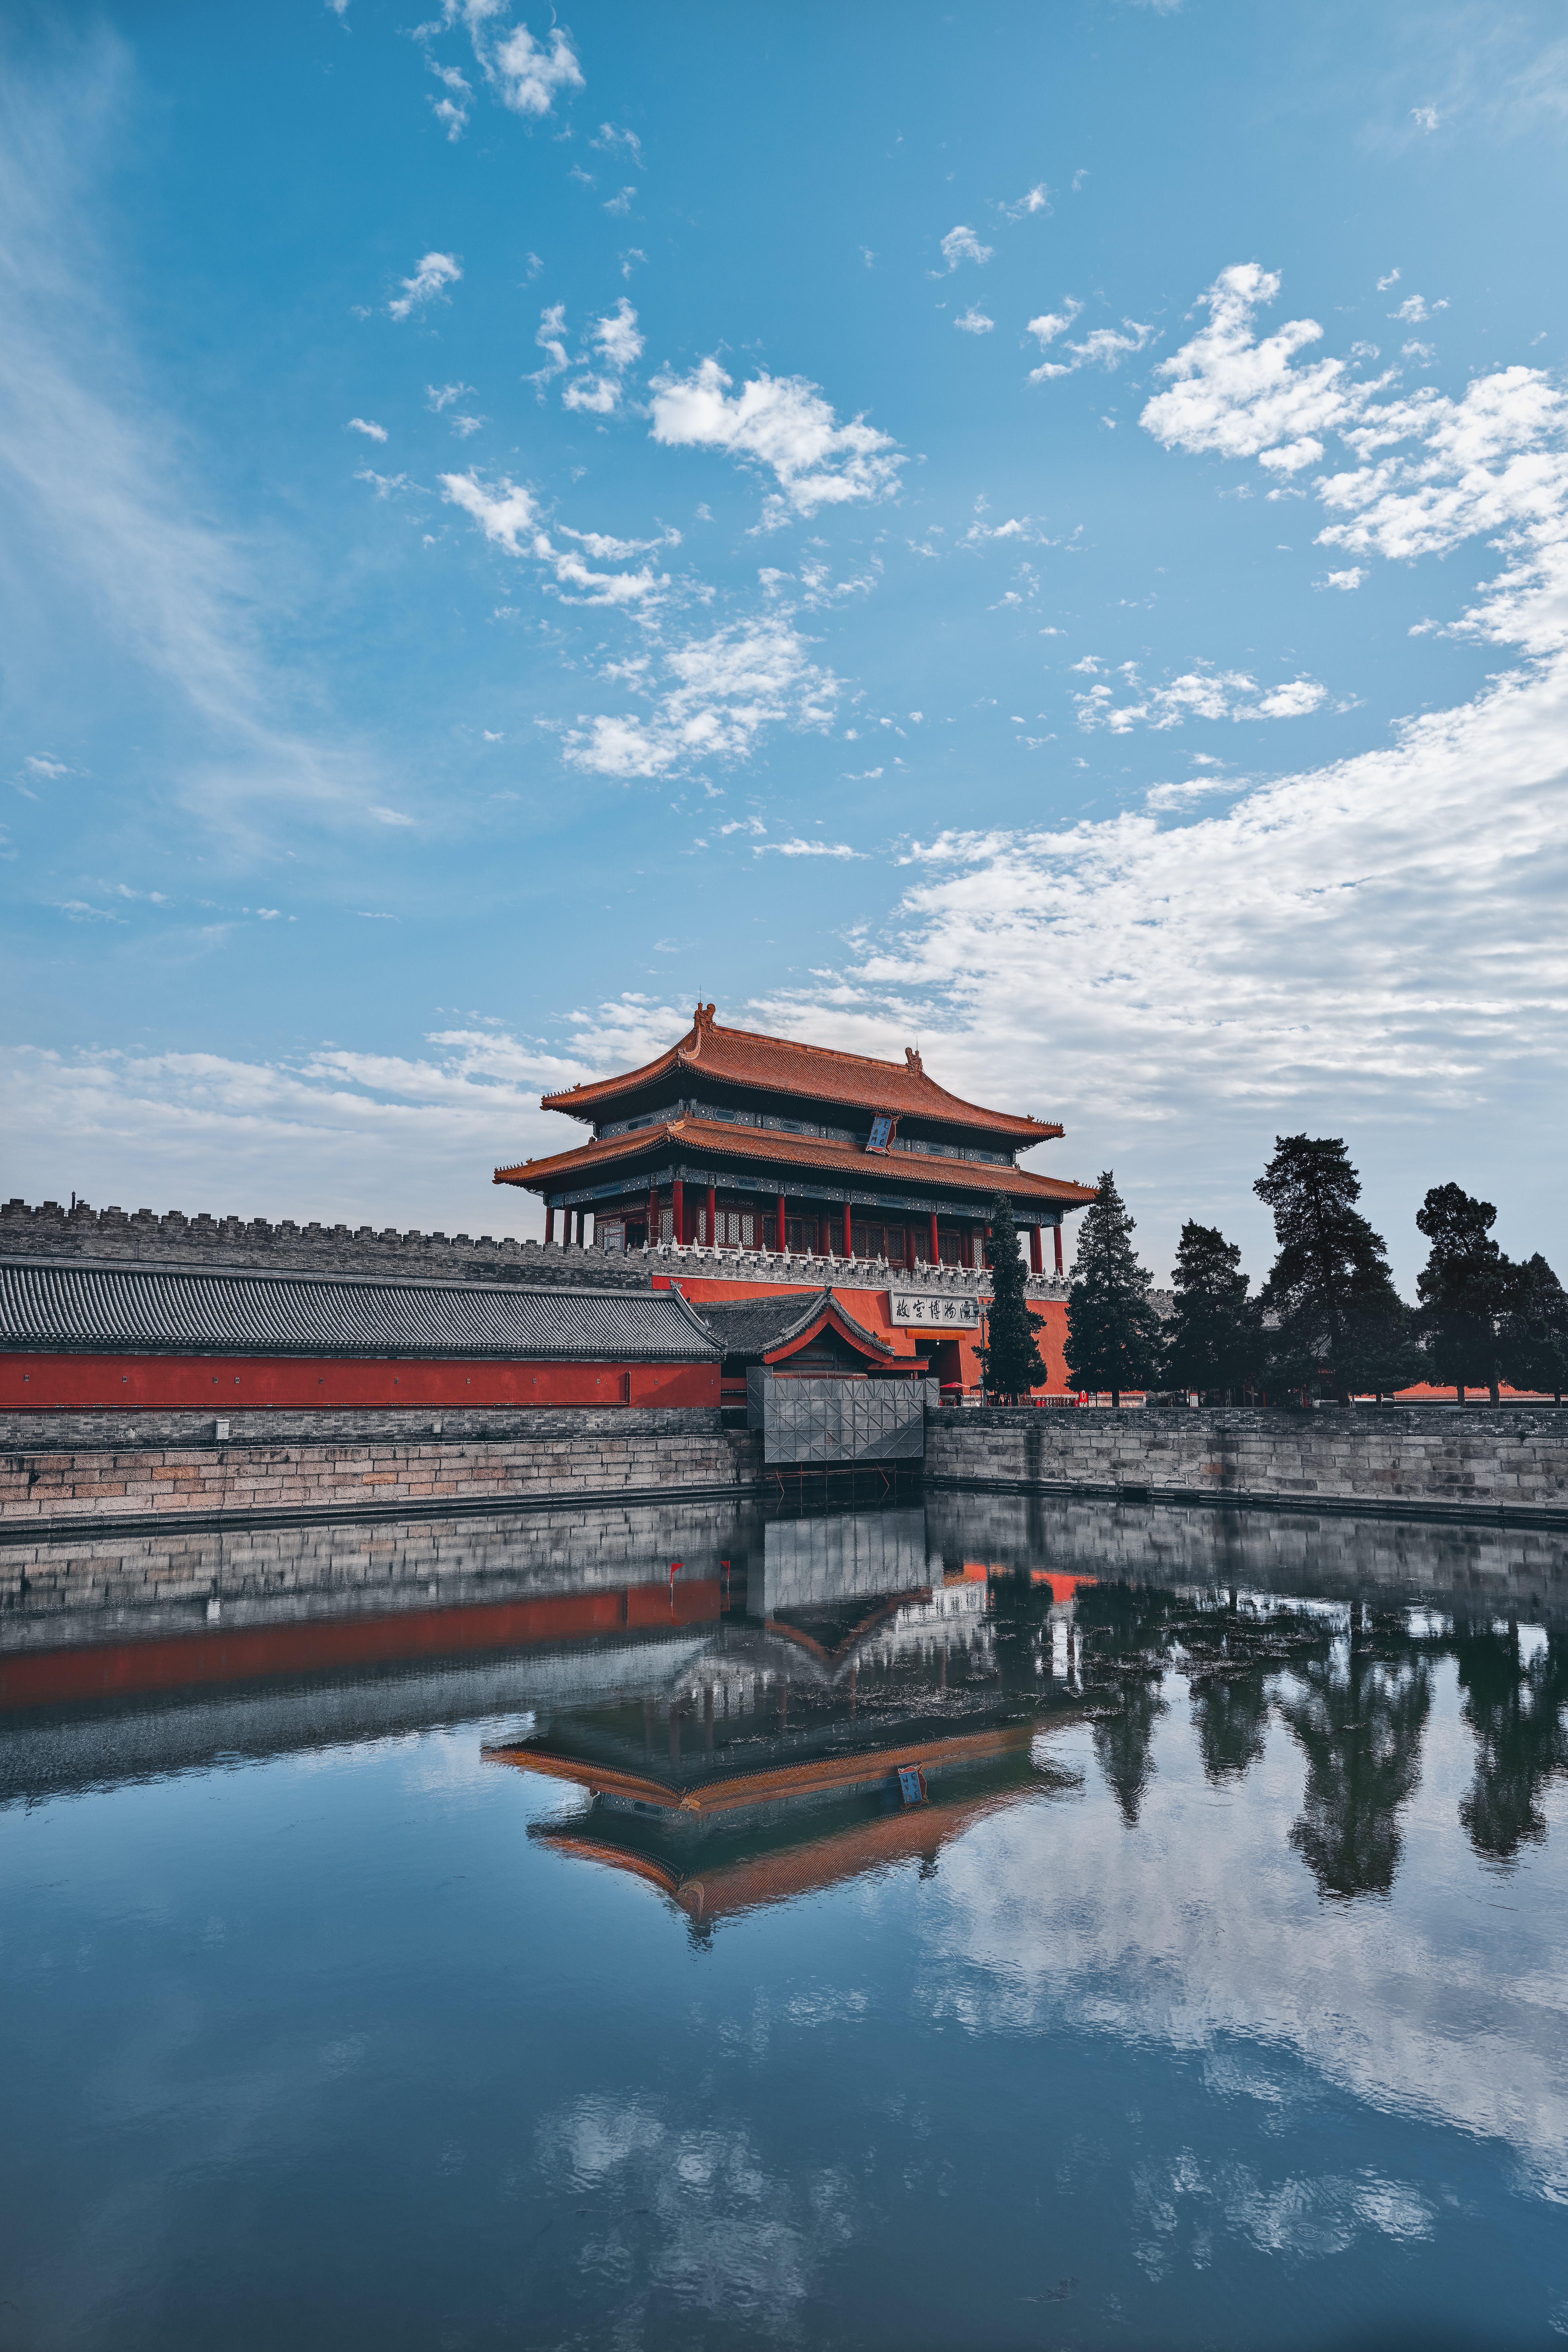 Forbidden City Wallpapers